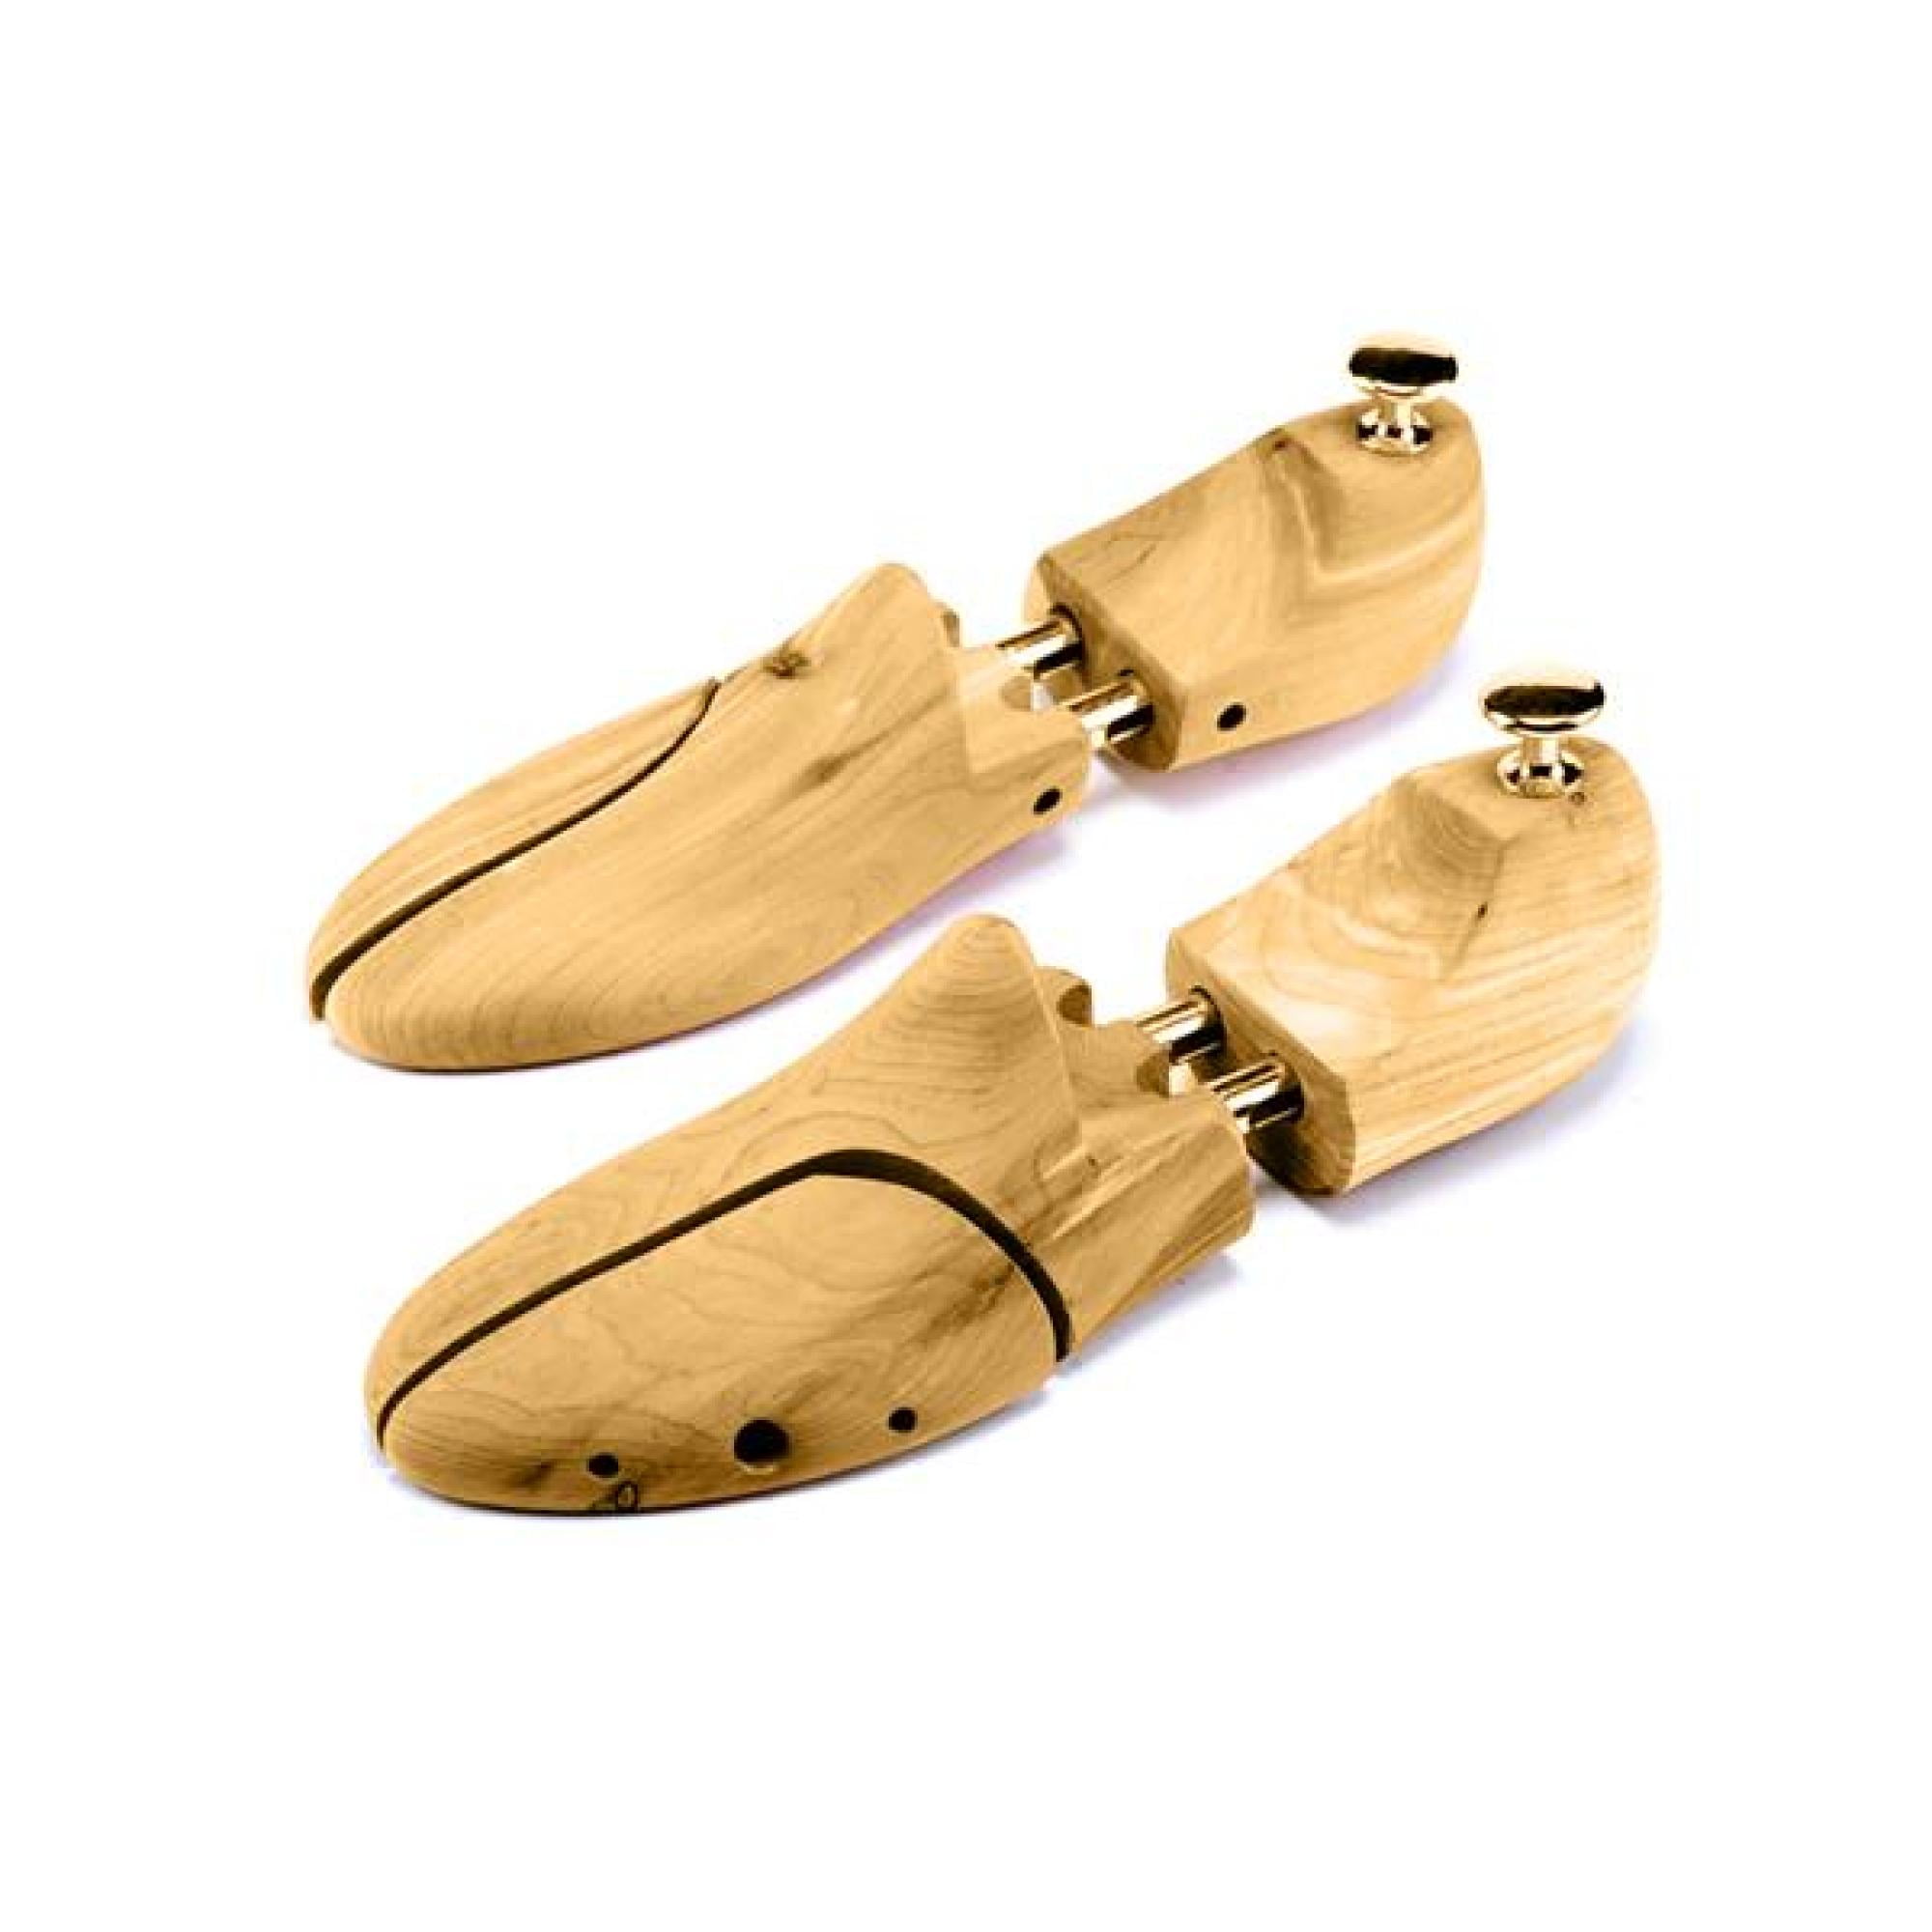 Details about   1 Pair Men's Flexible Shoe Shapers Stretcher Cedar Wood Shoe Tree for Size 39-46 